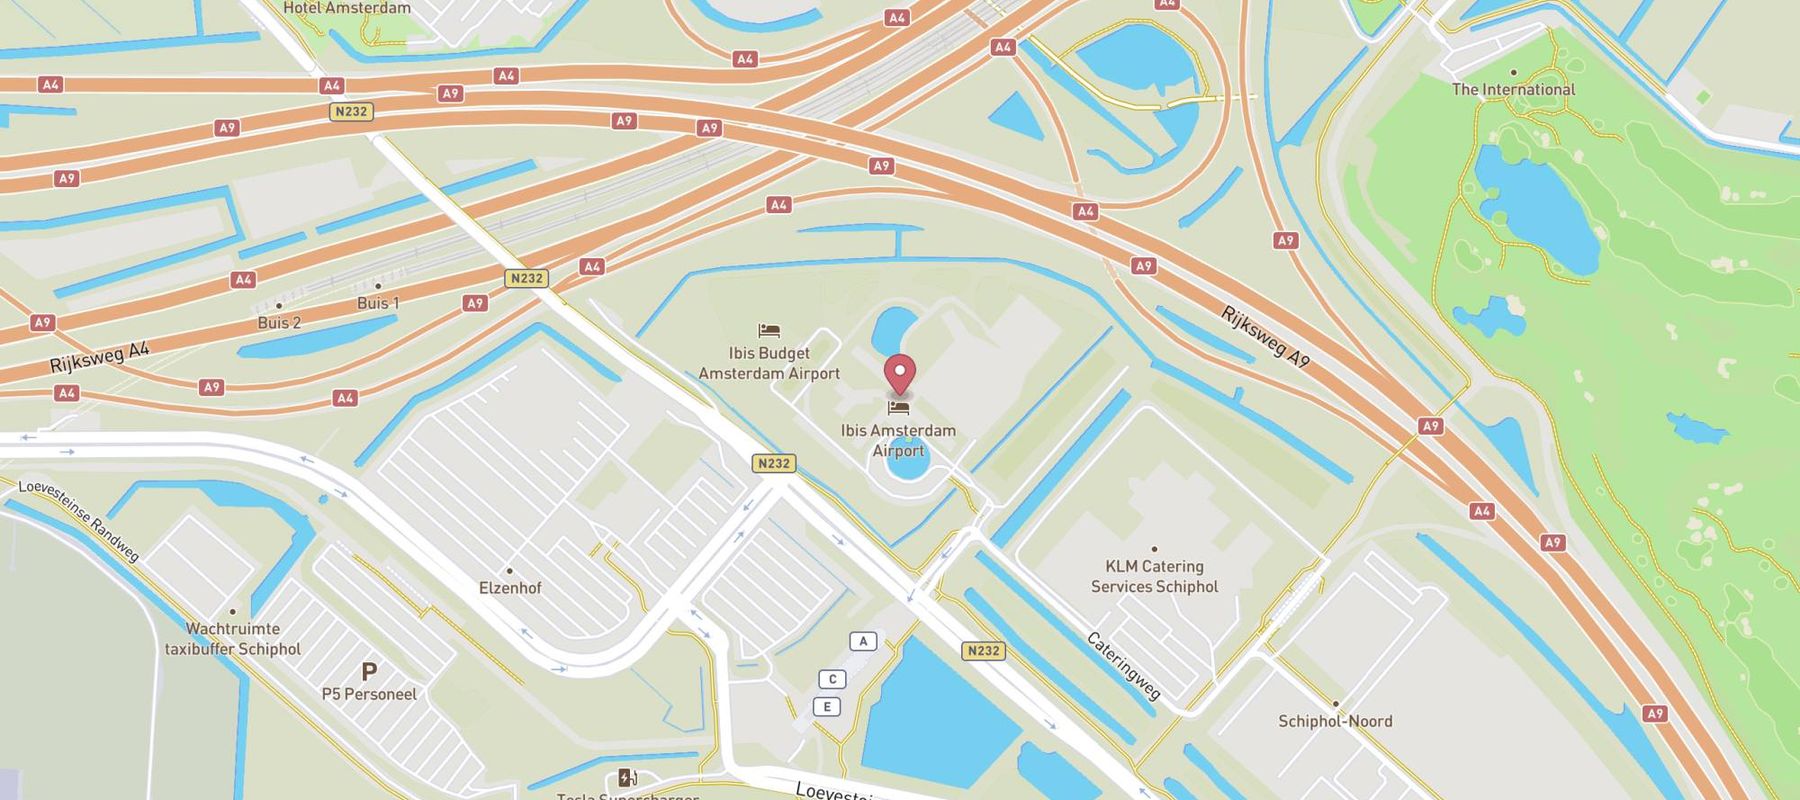 Hotel ibis budget Amsterdam Airport map